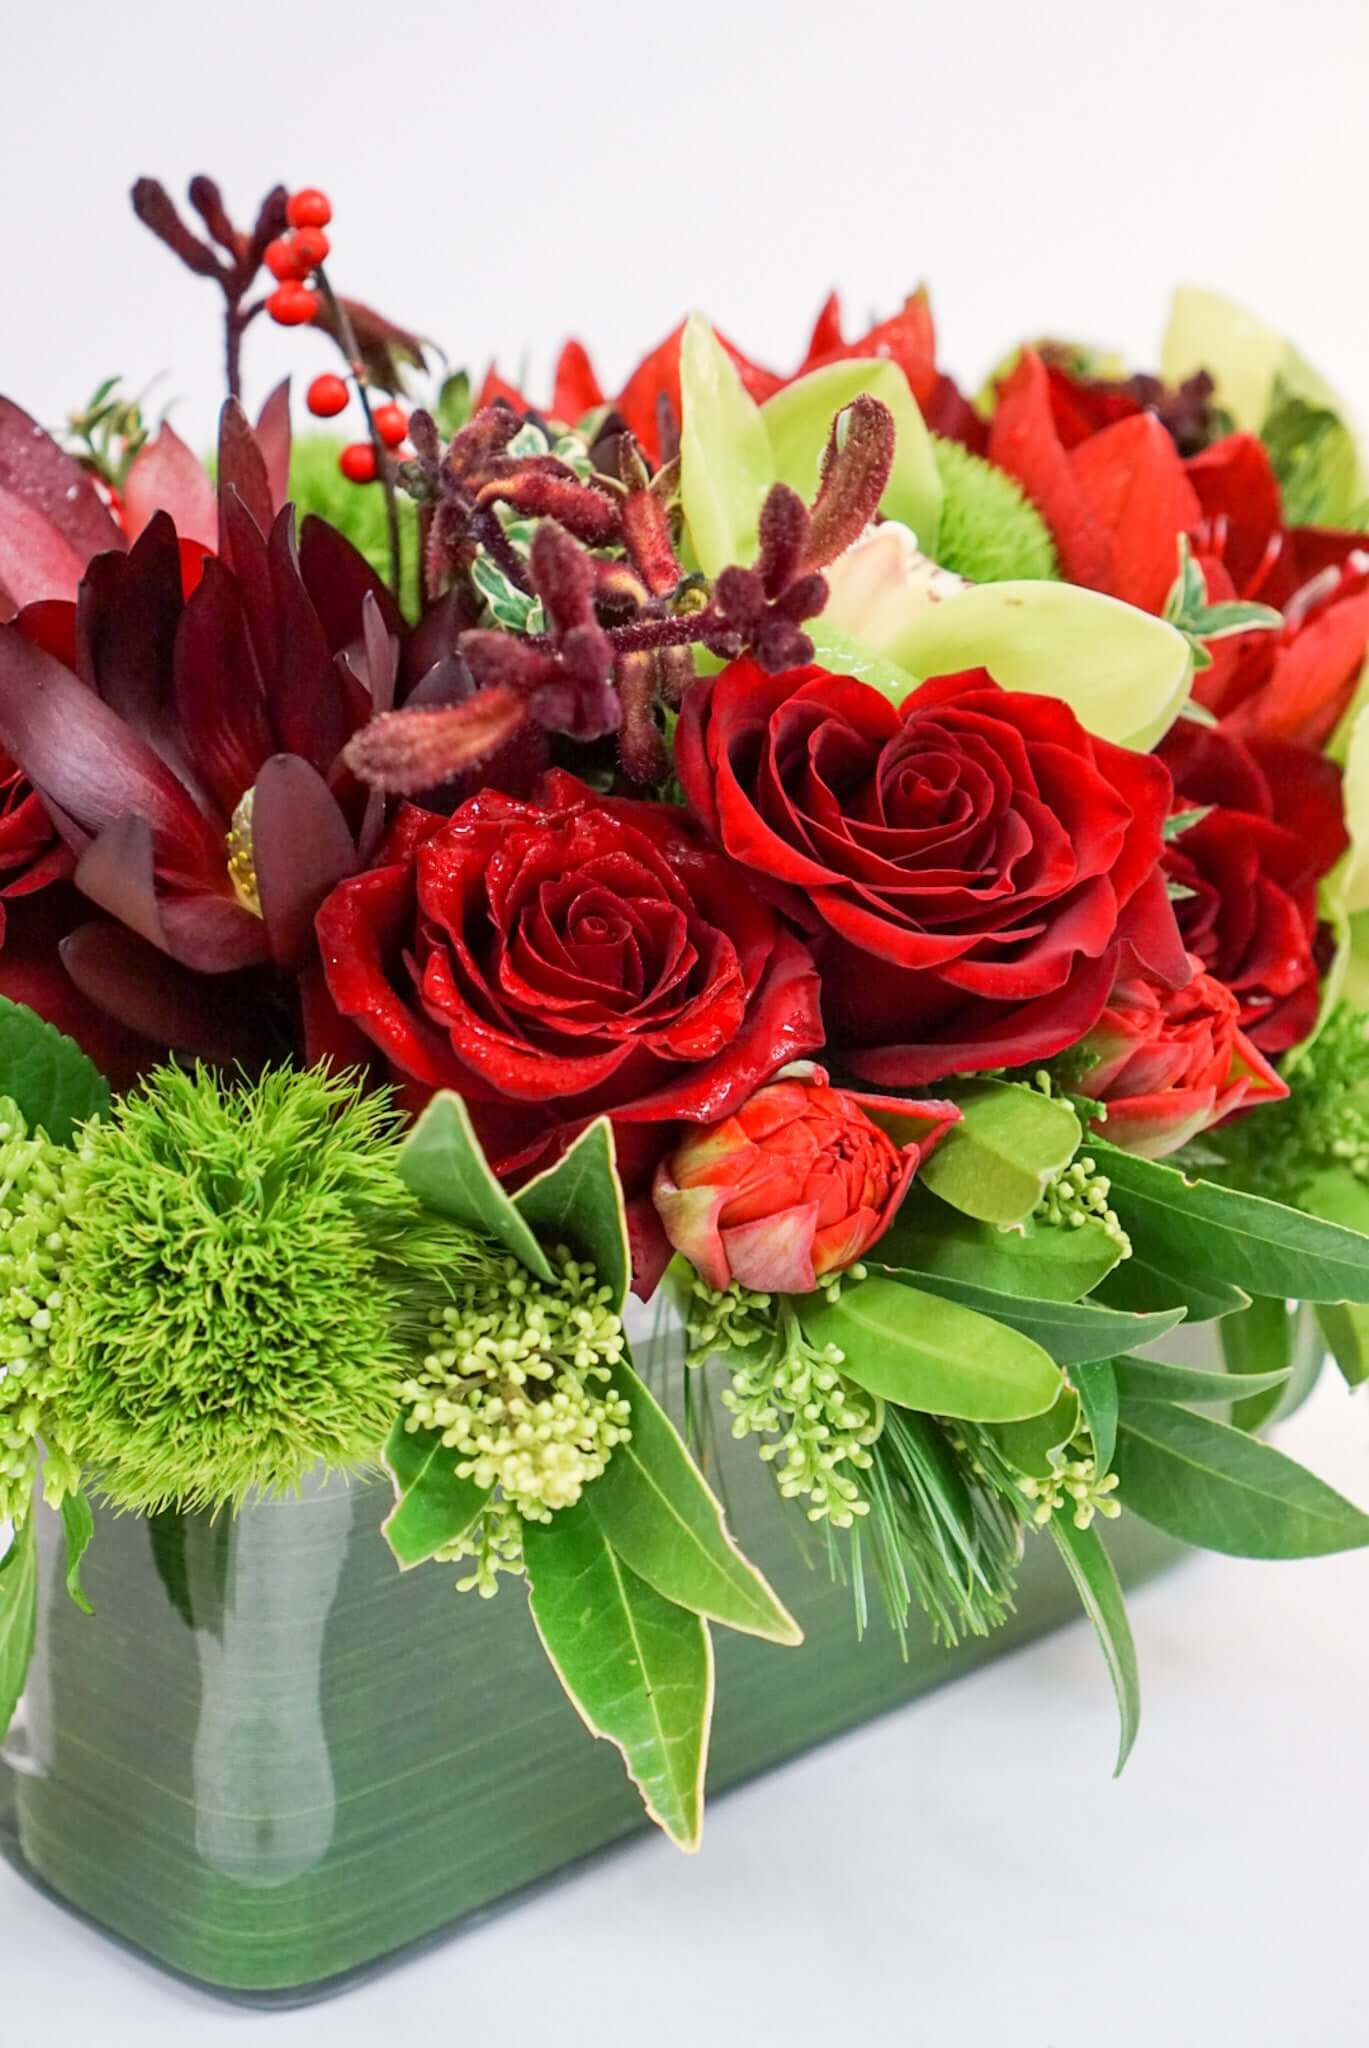 Christmas Wish Centerpiece - Flower Nook - Toronto Florist